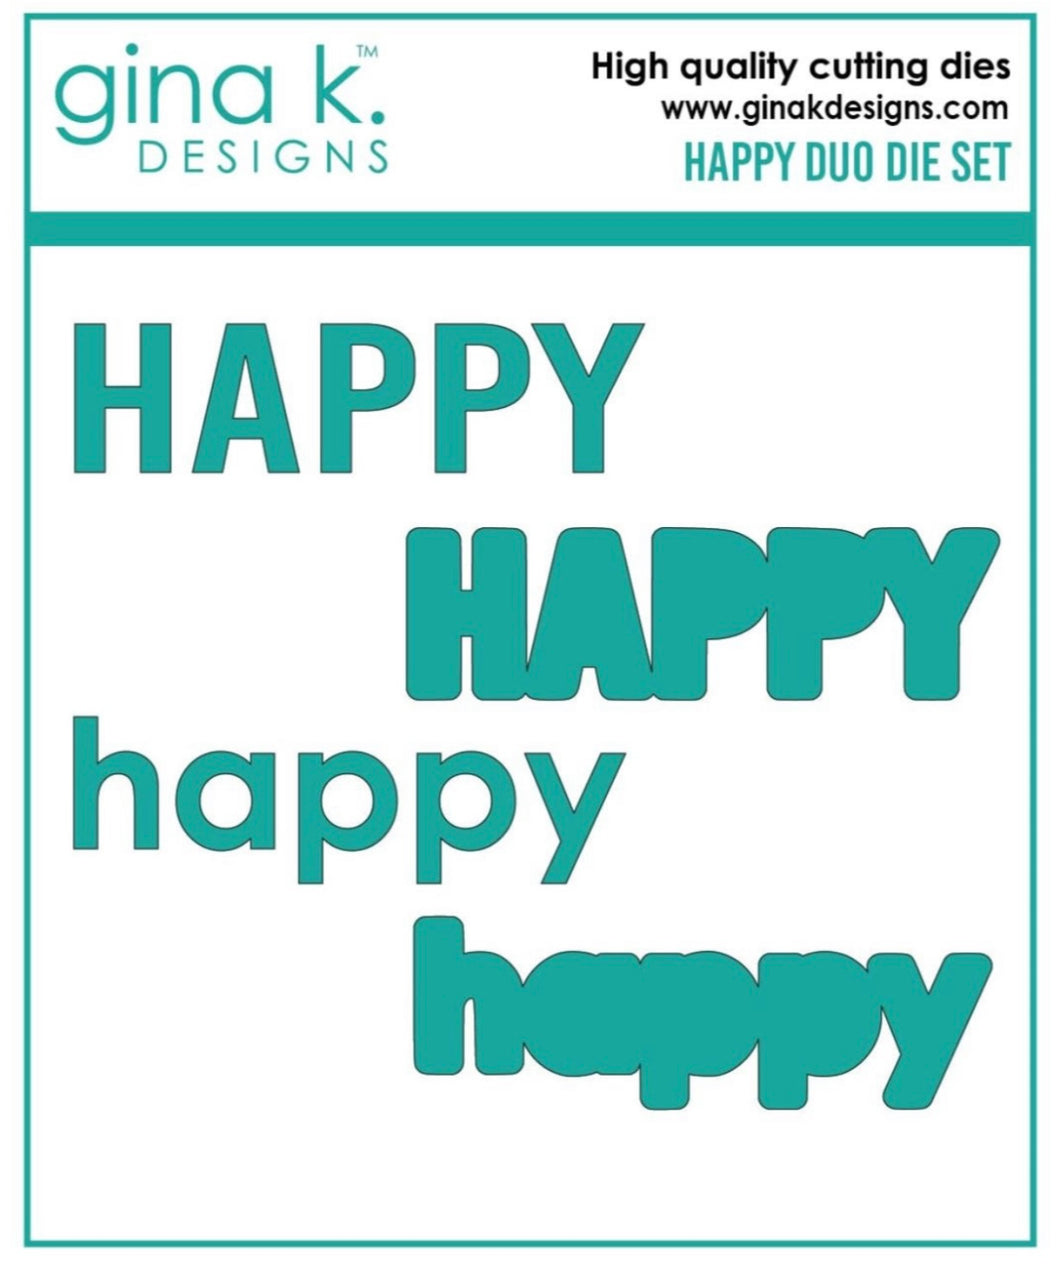 Gina K Designs - Happy Duo Die Set